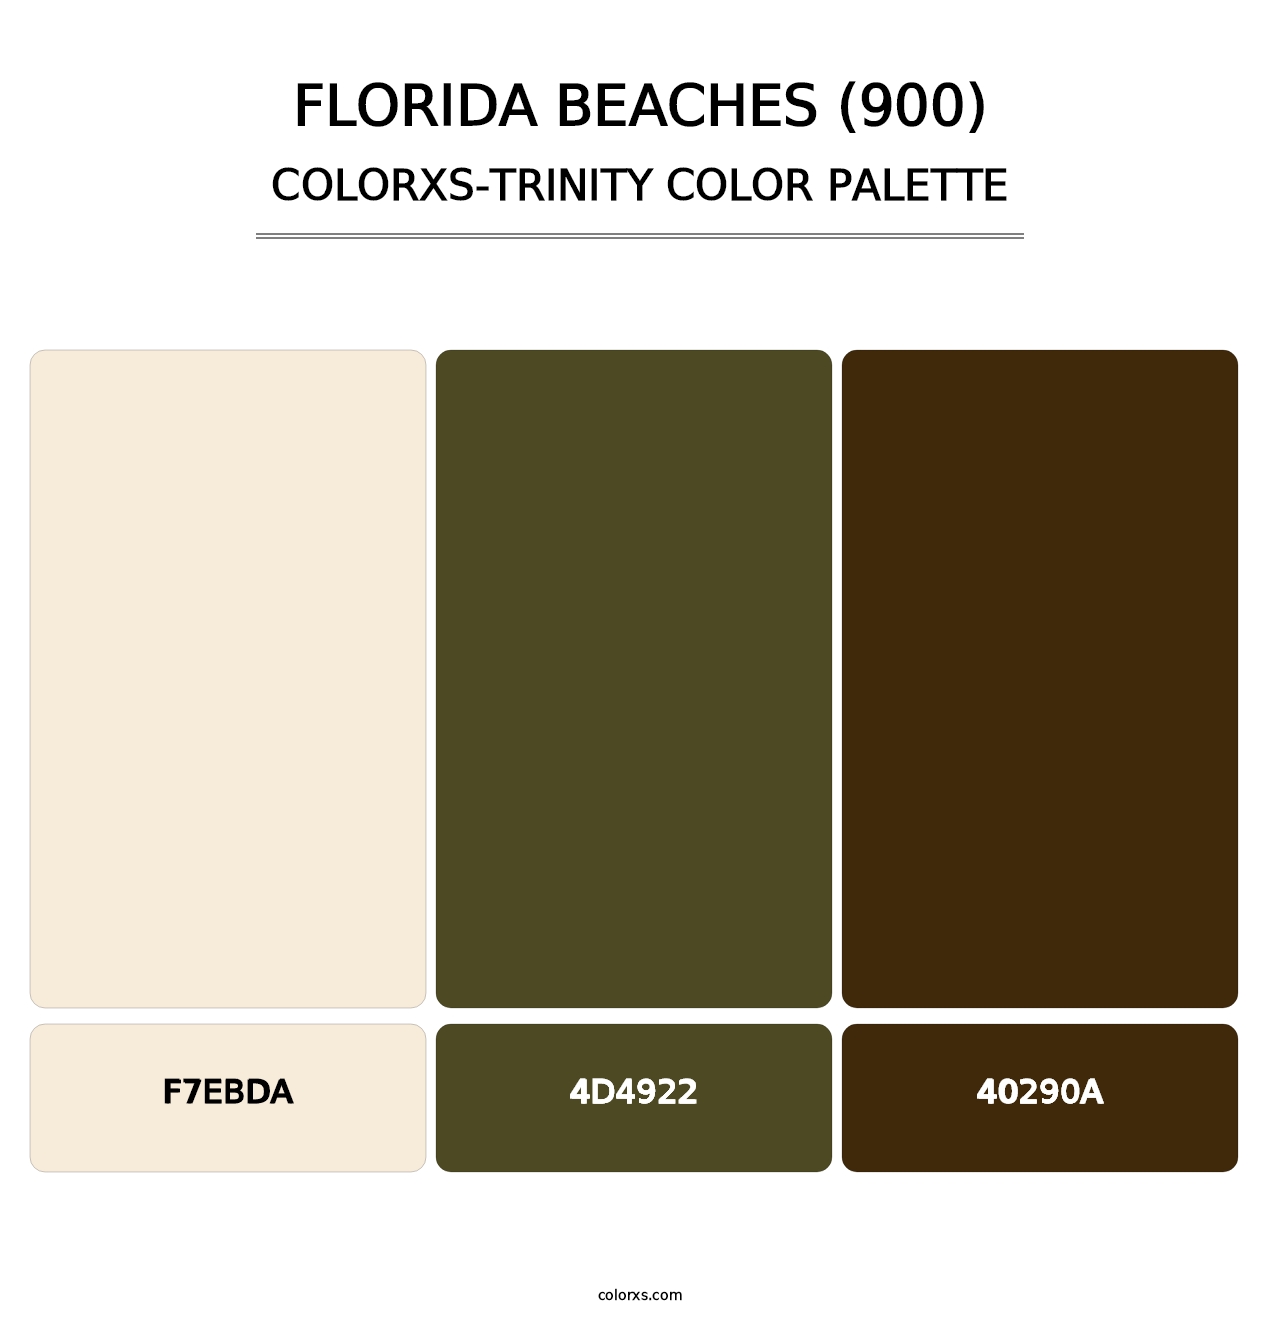 Florida Beaches (900) - Colorxs Trinity Palette